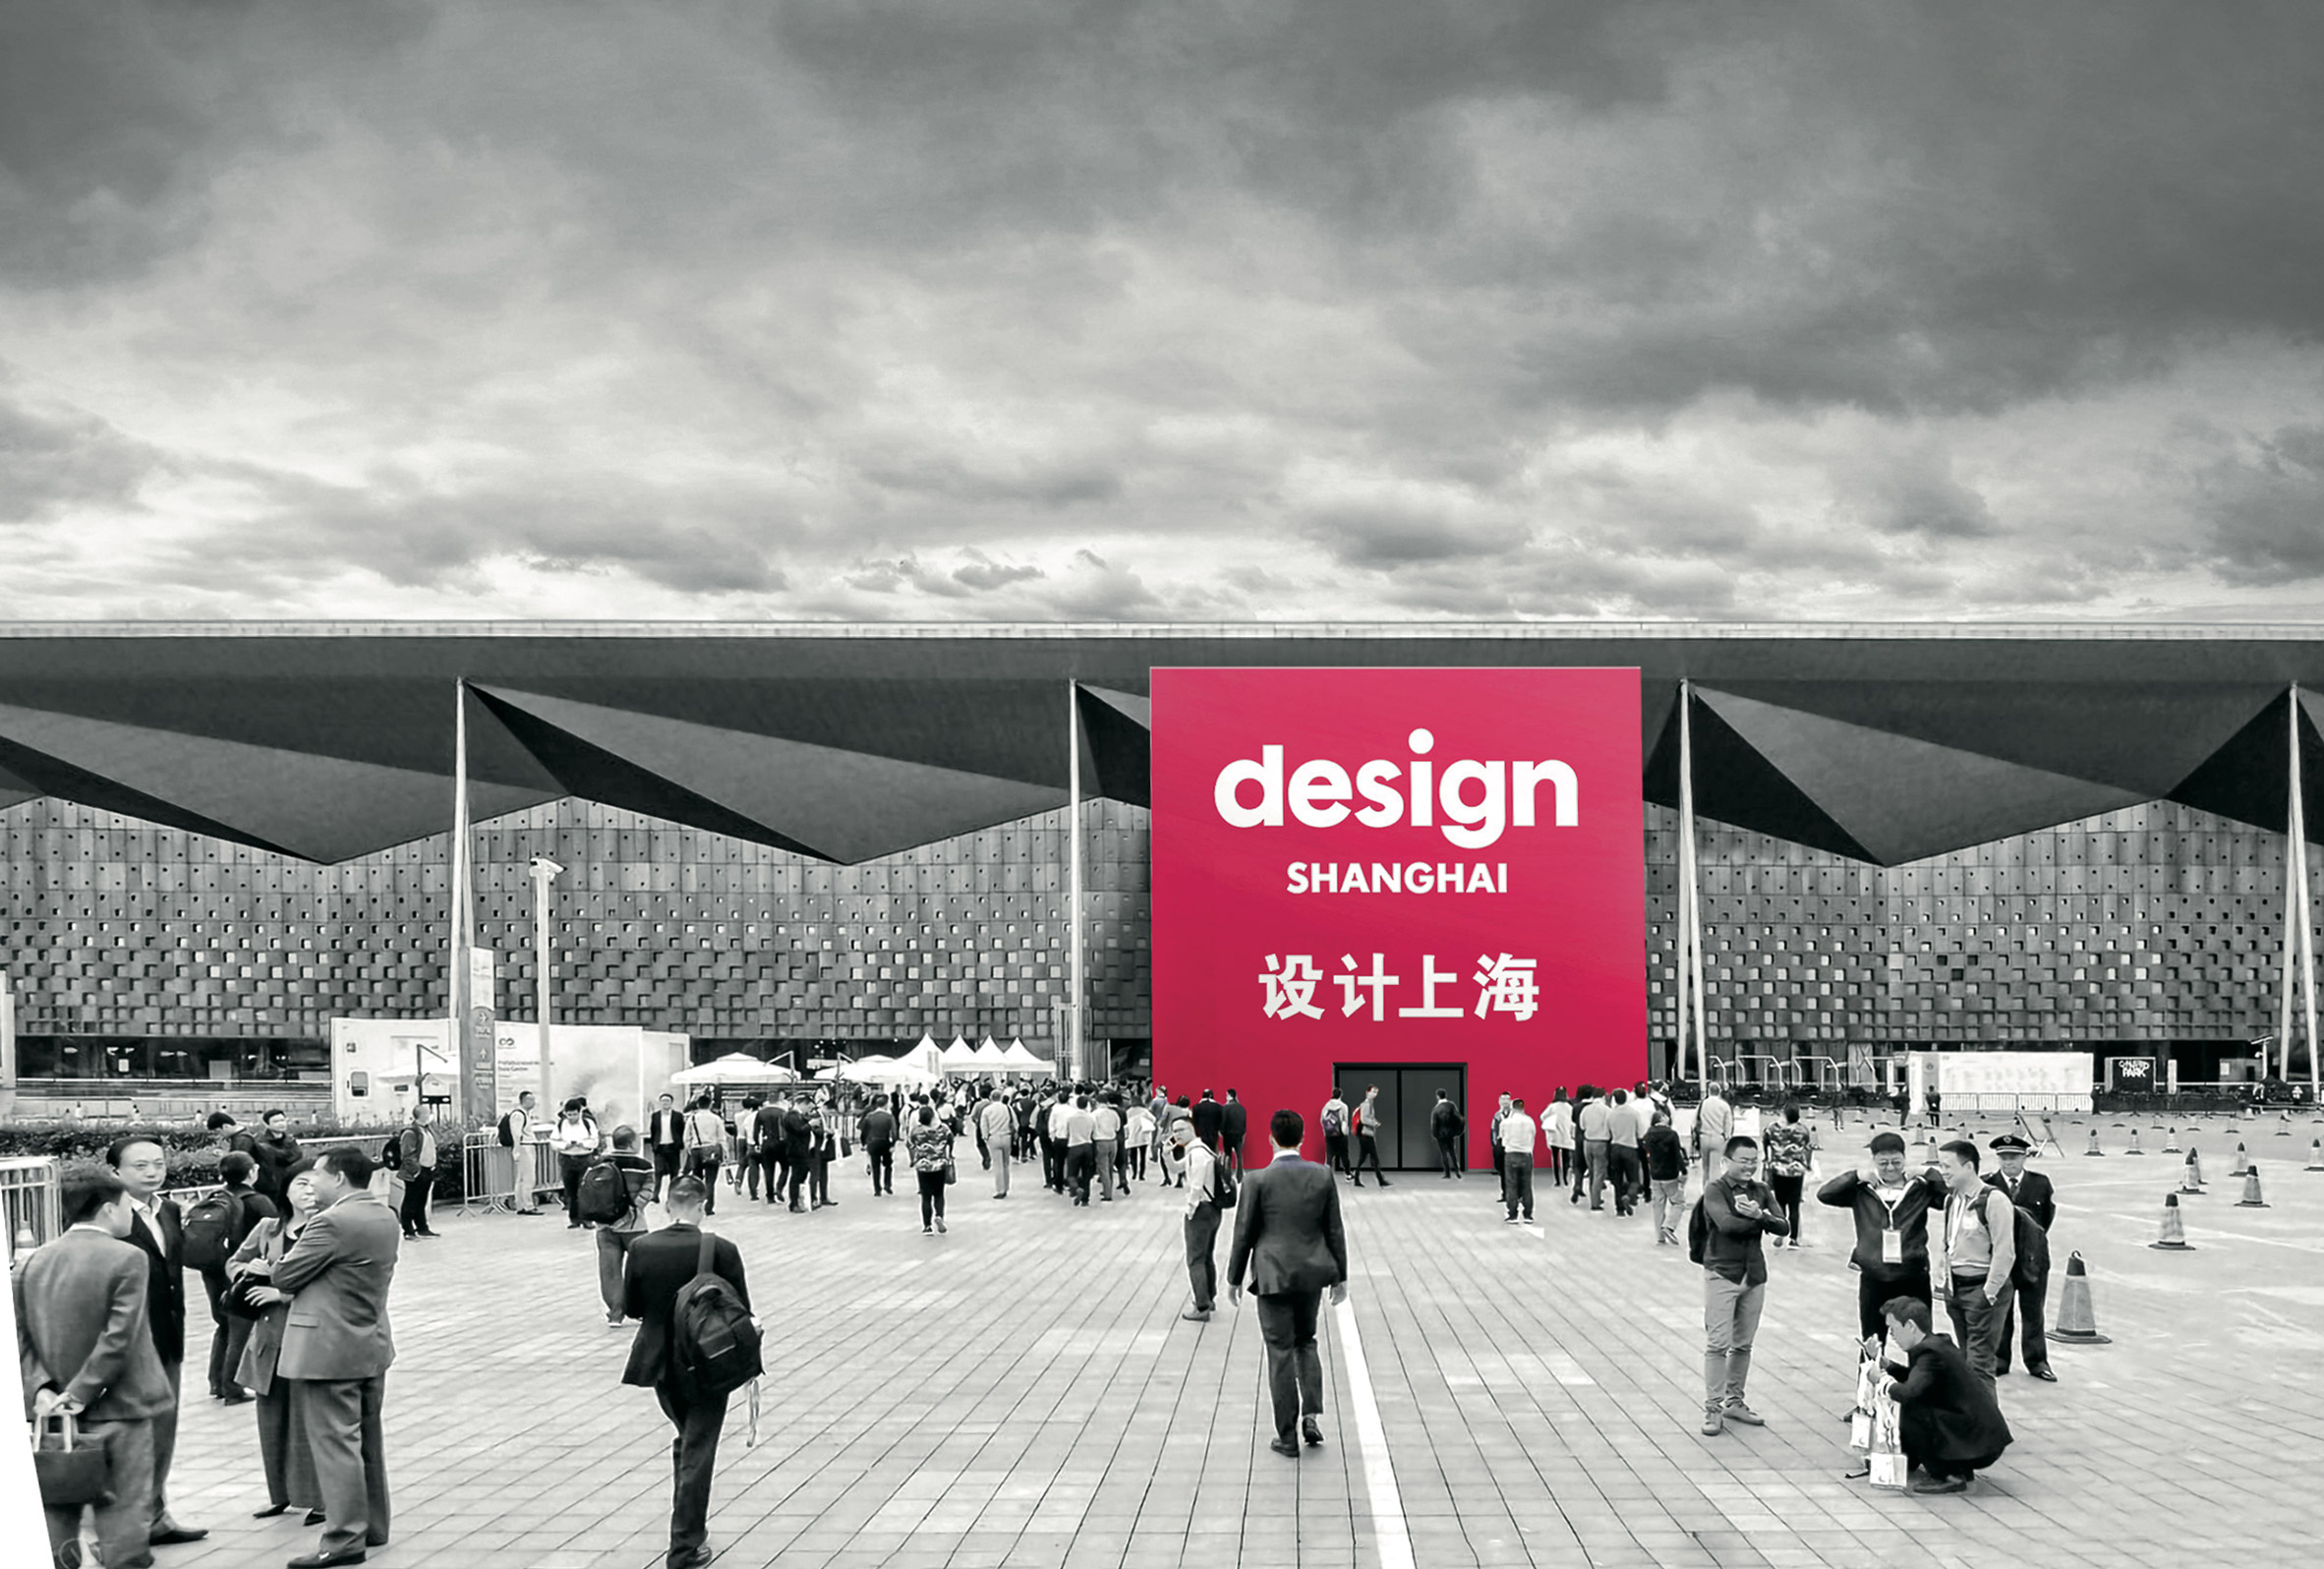 https://static.dezeen.com/uploads/2020/01/design-shanghai-postponed-news-col-1.jpg